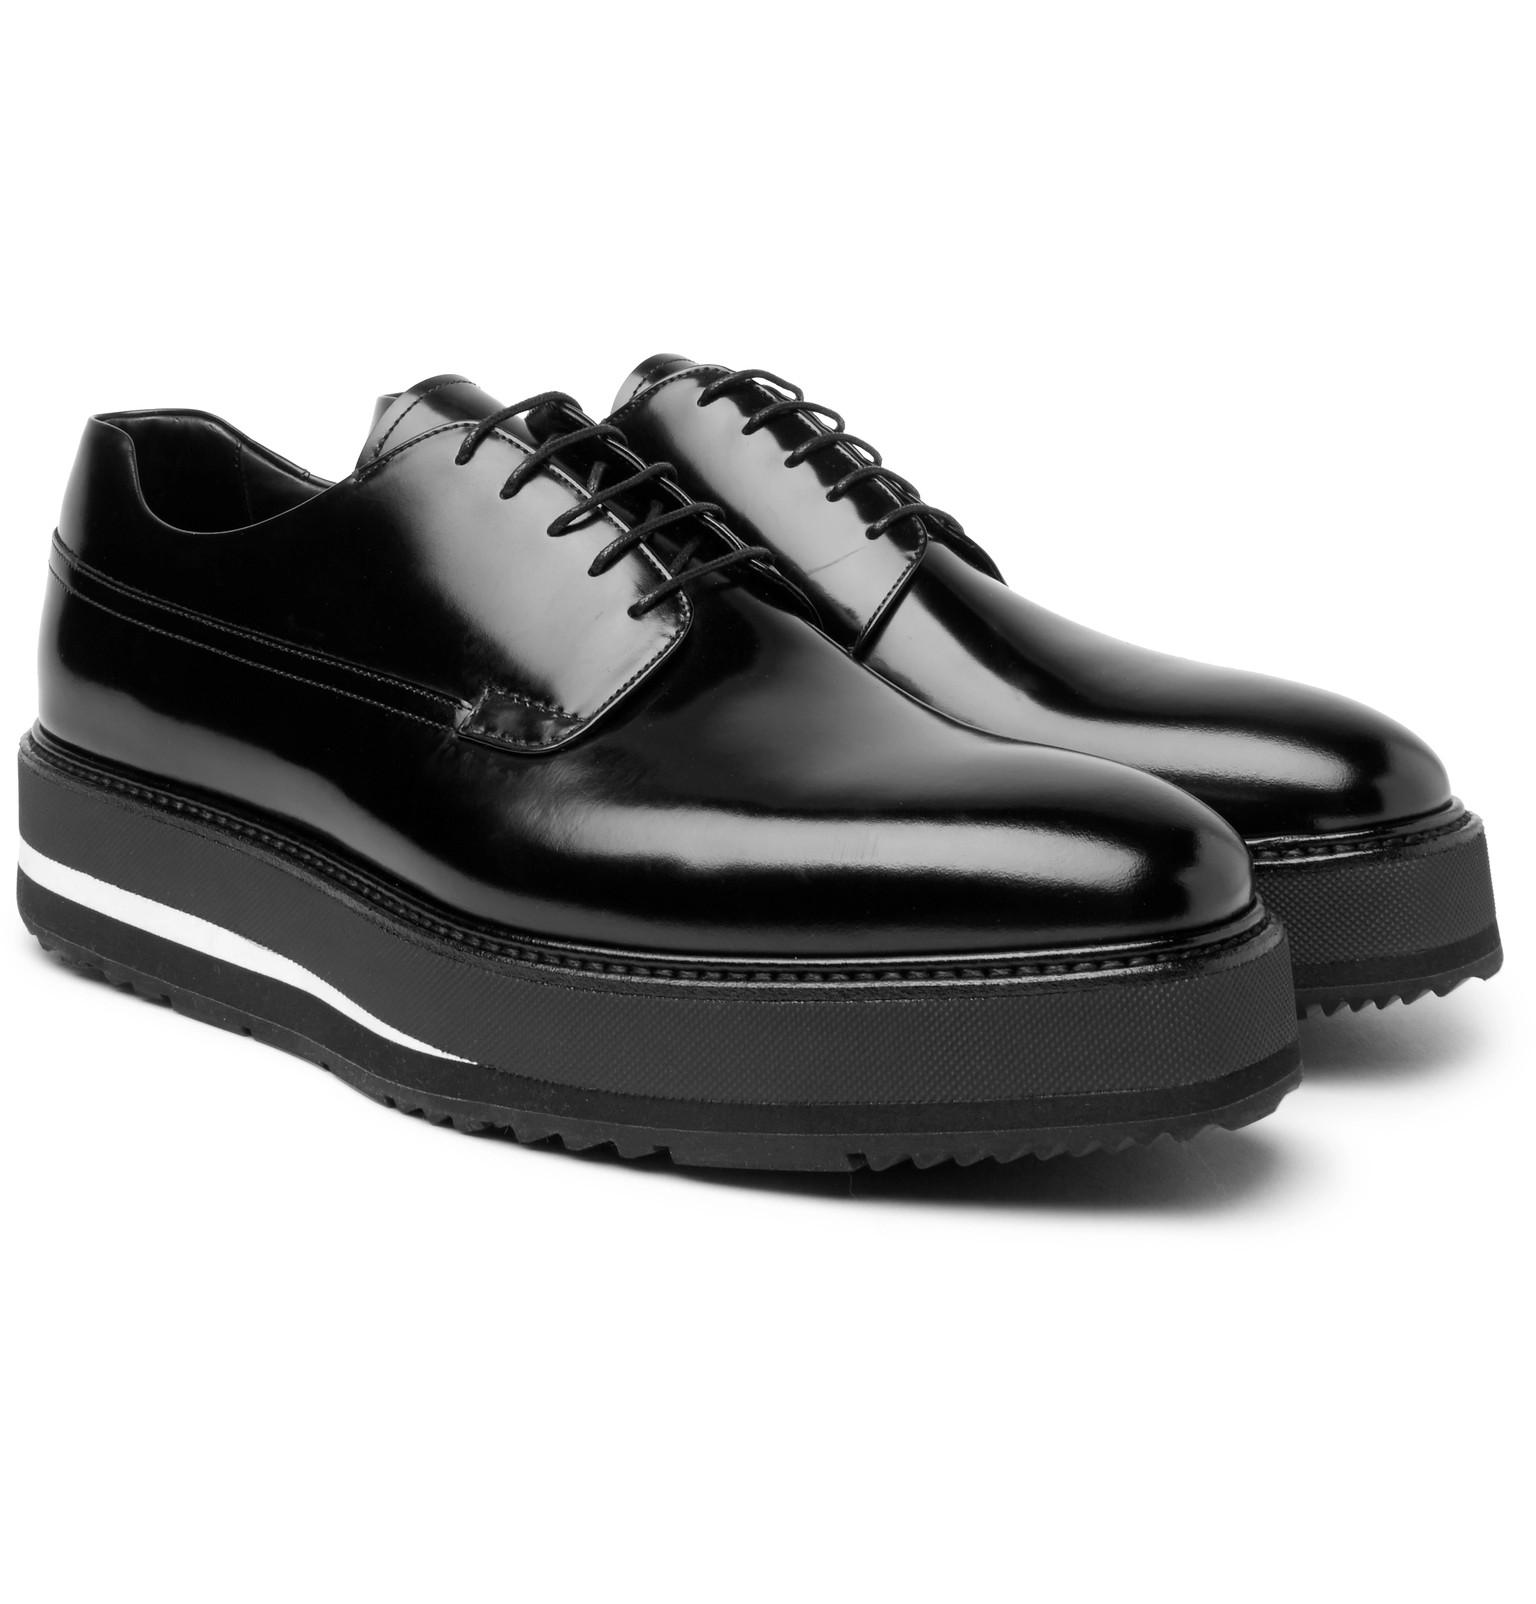 prada spazzolato leather derby shoes, OFF 78%,www.amarkotarim.com.tr